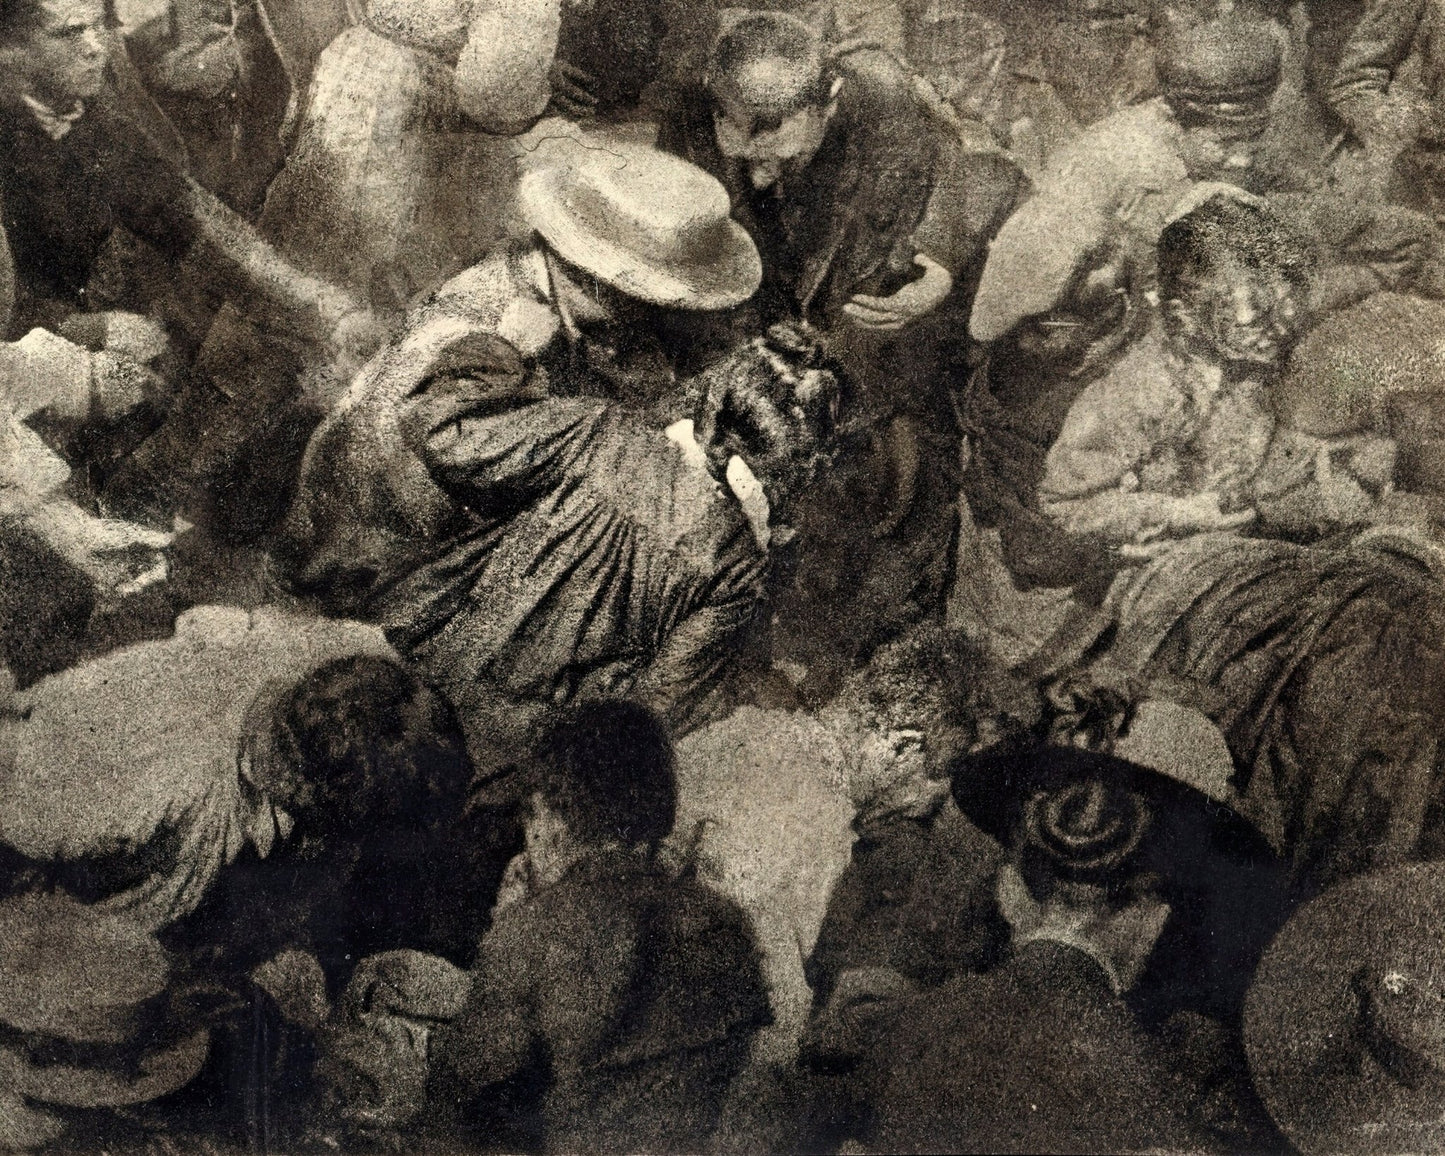 Robert Demachy "The Crowd" (c.1910) - Mabon Gallery